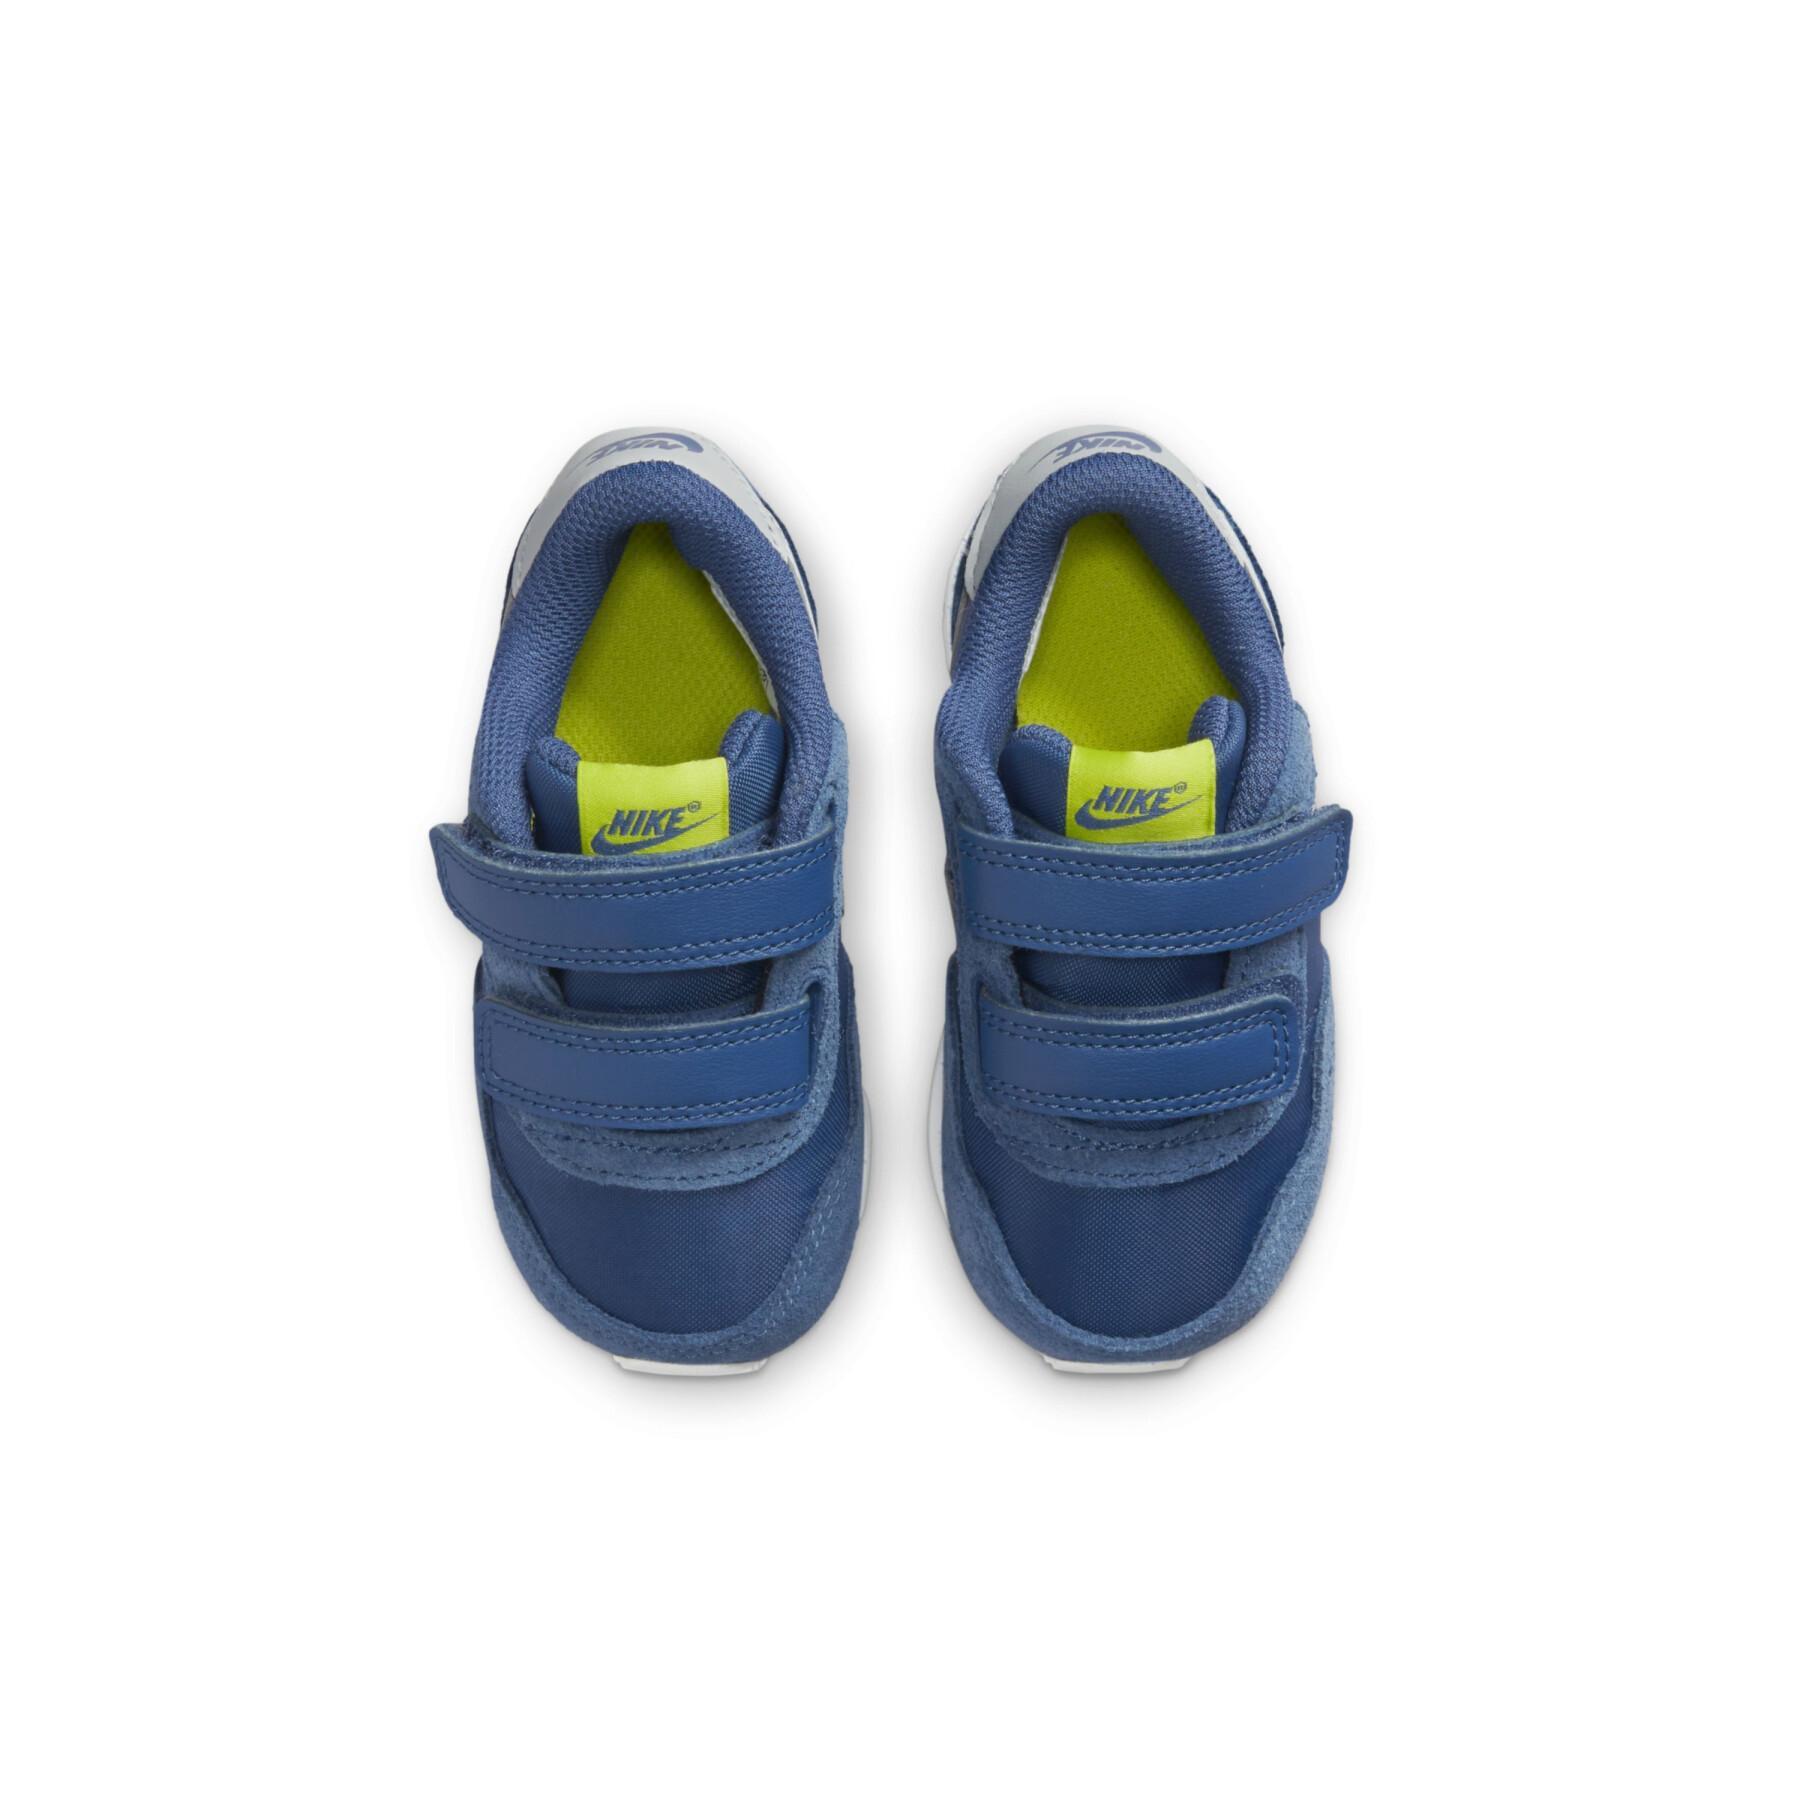 Baby boy sneakers Nike Valiant